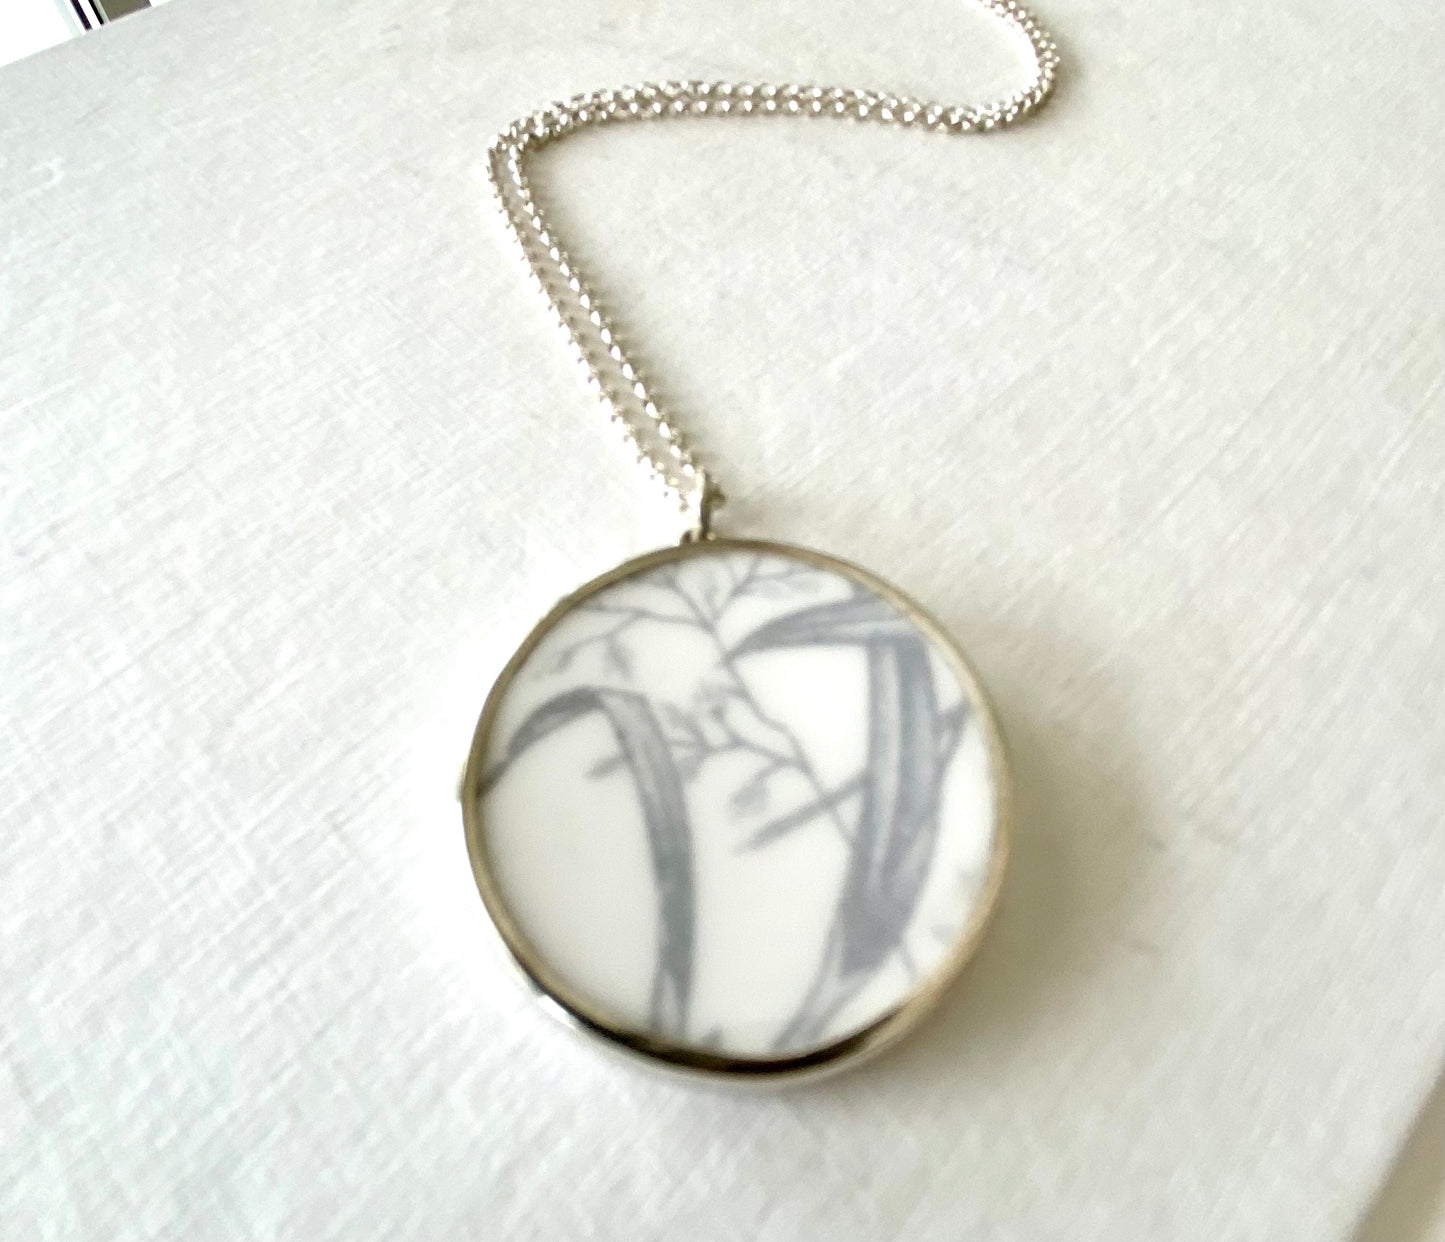 Large white and grey ceramic pendant